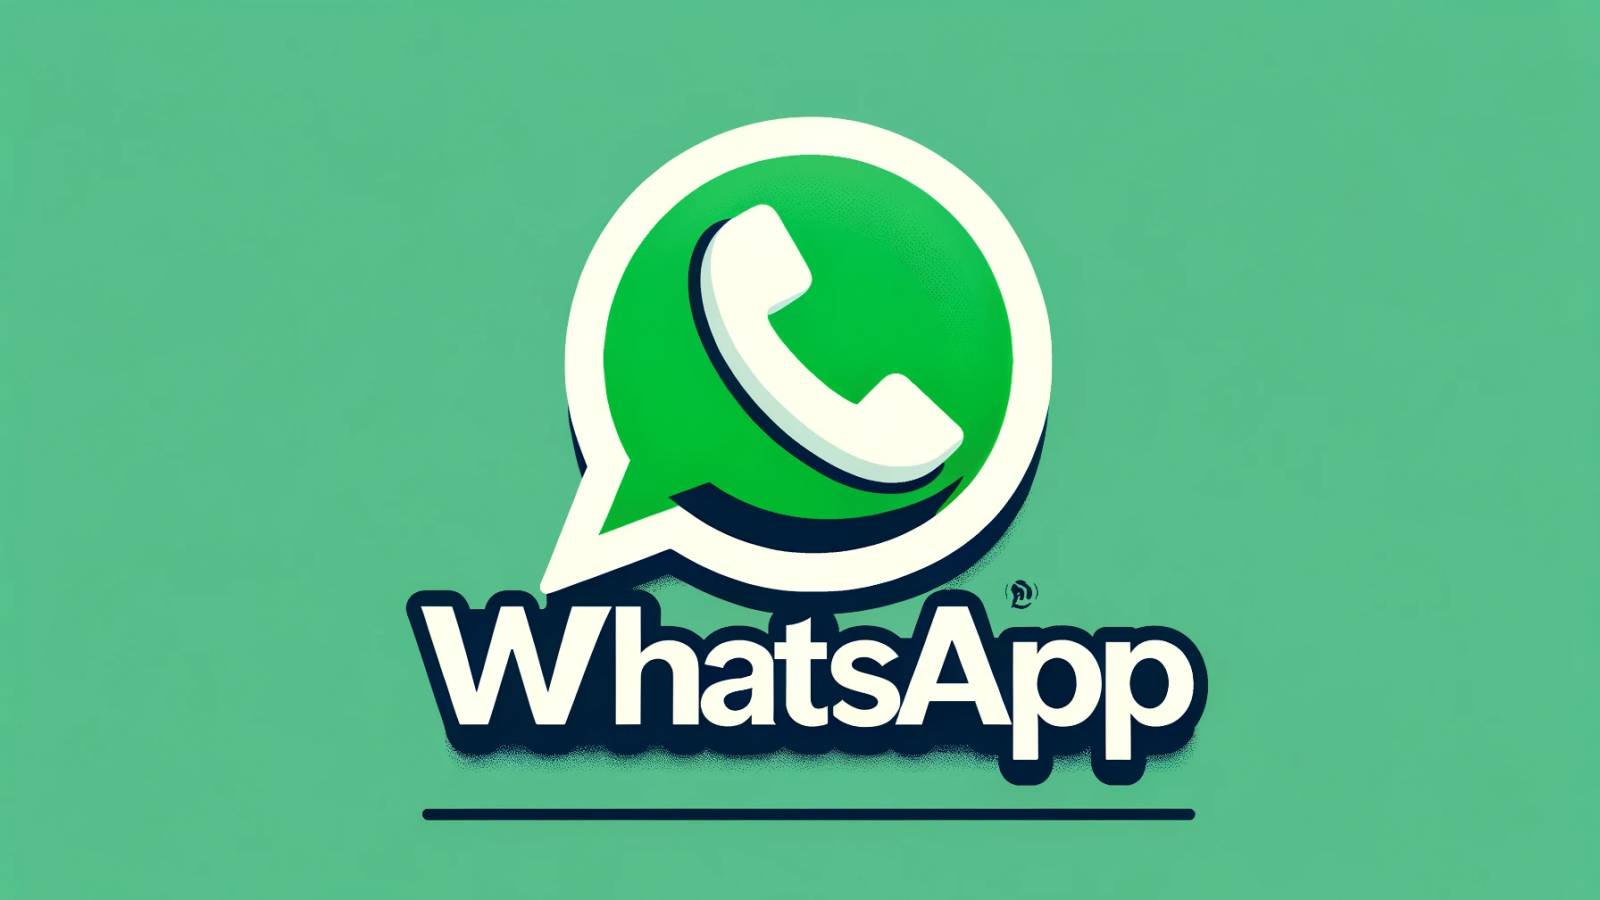 WhatsApp broadcasts